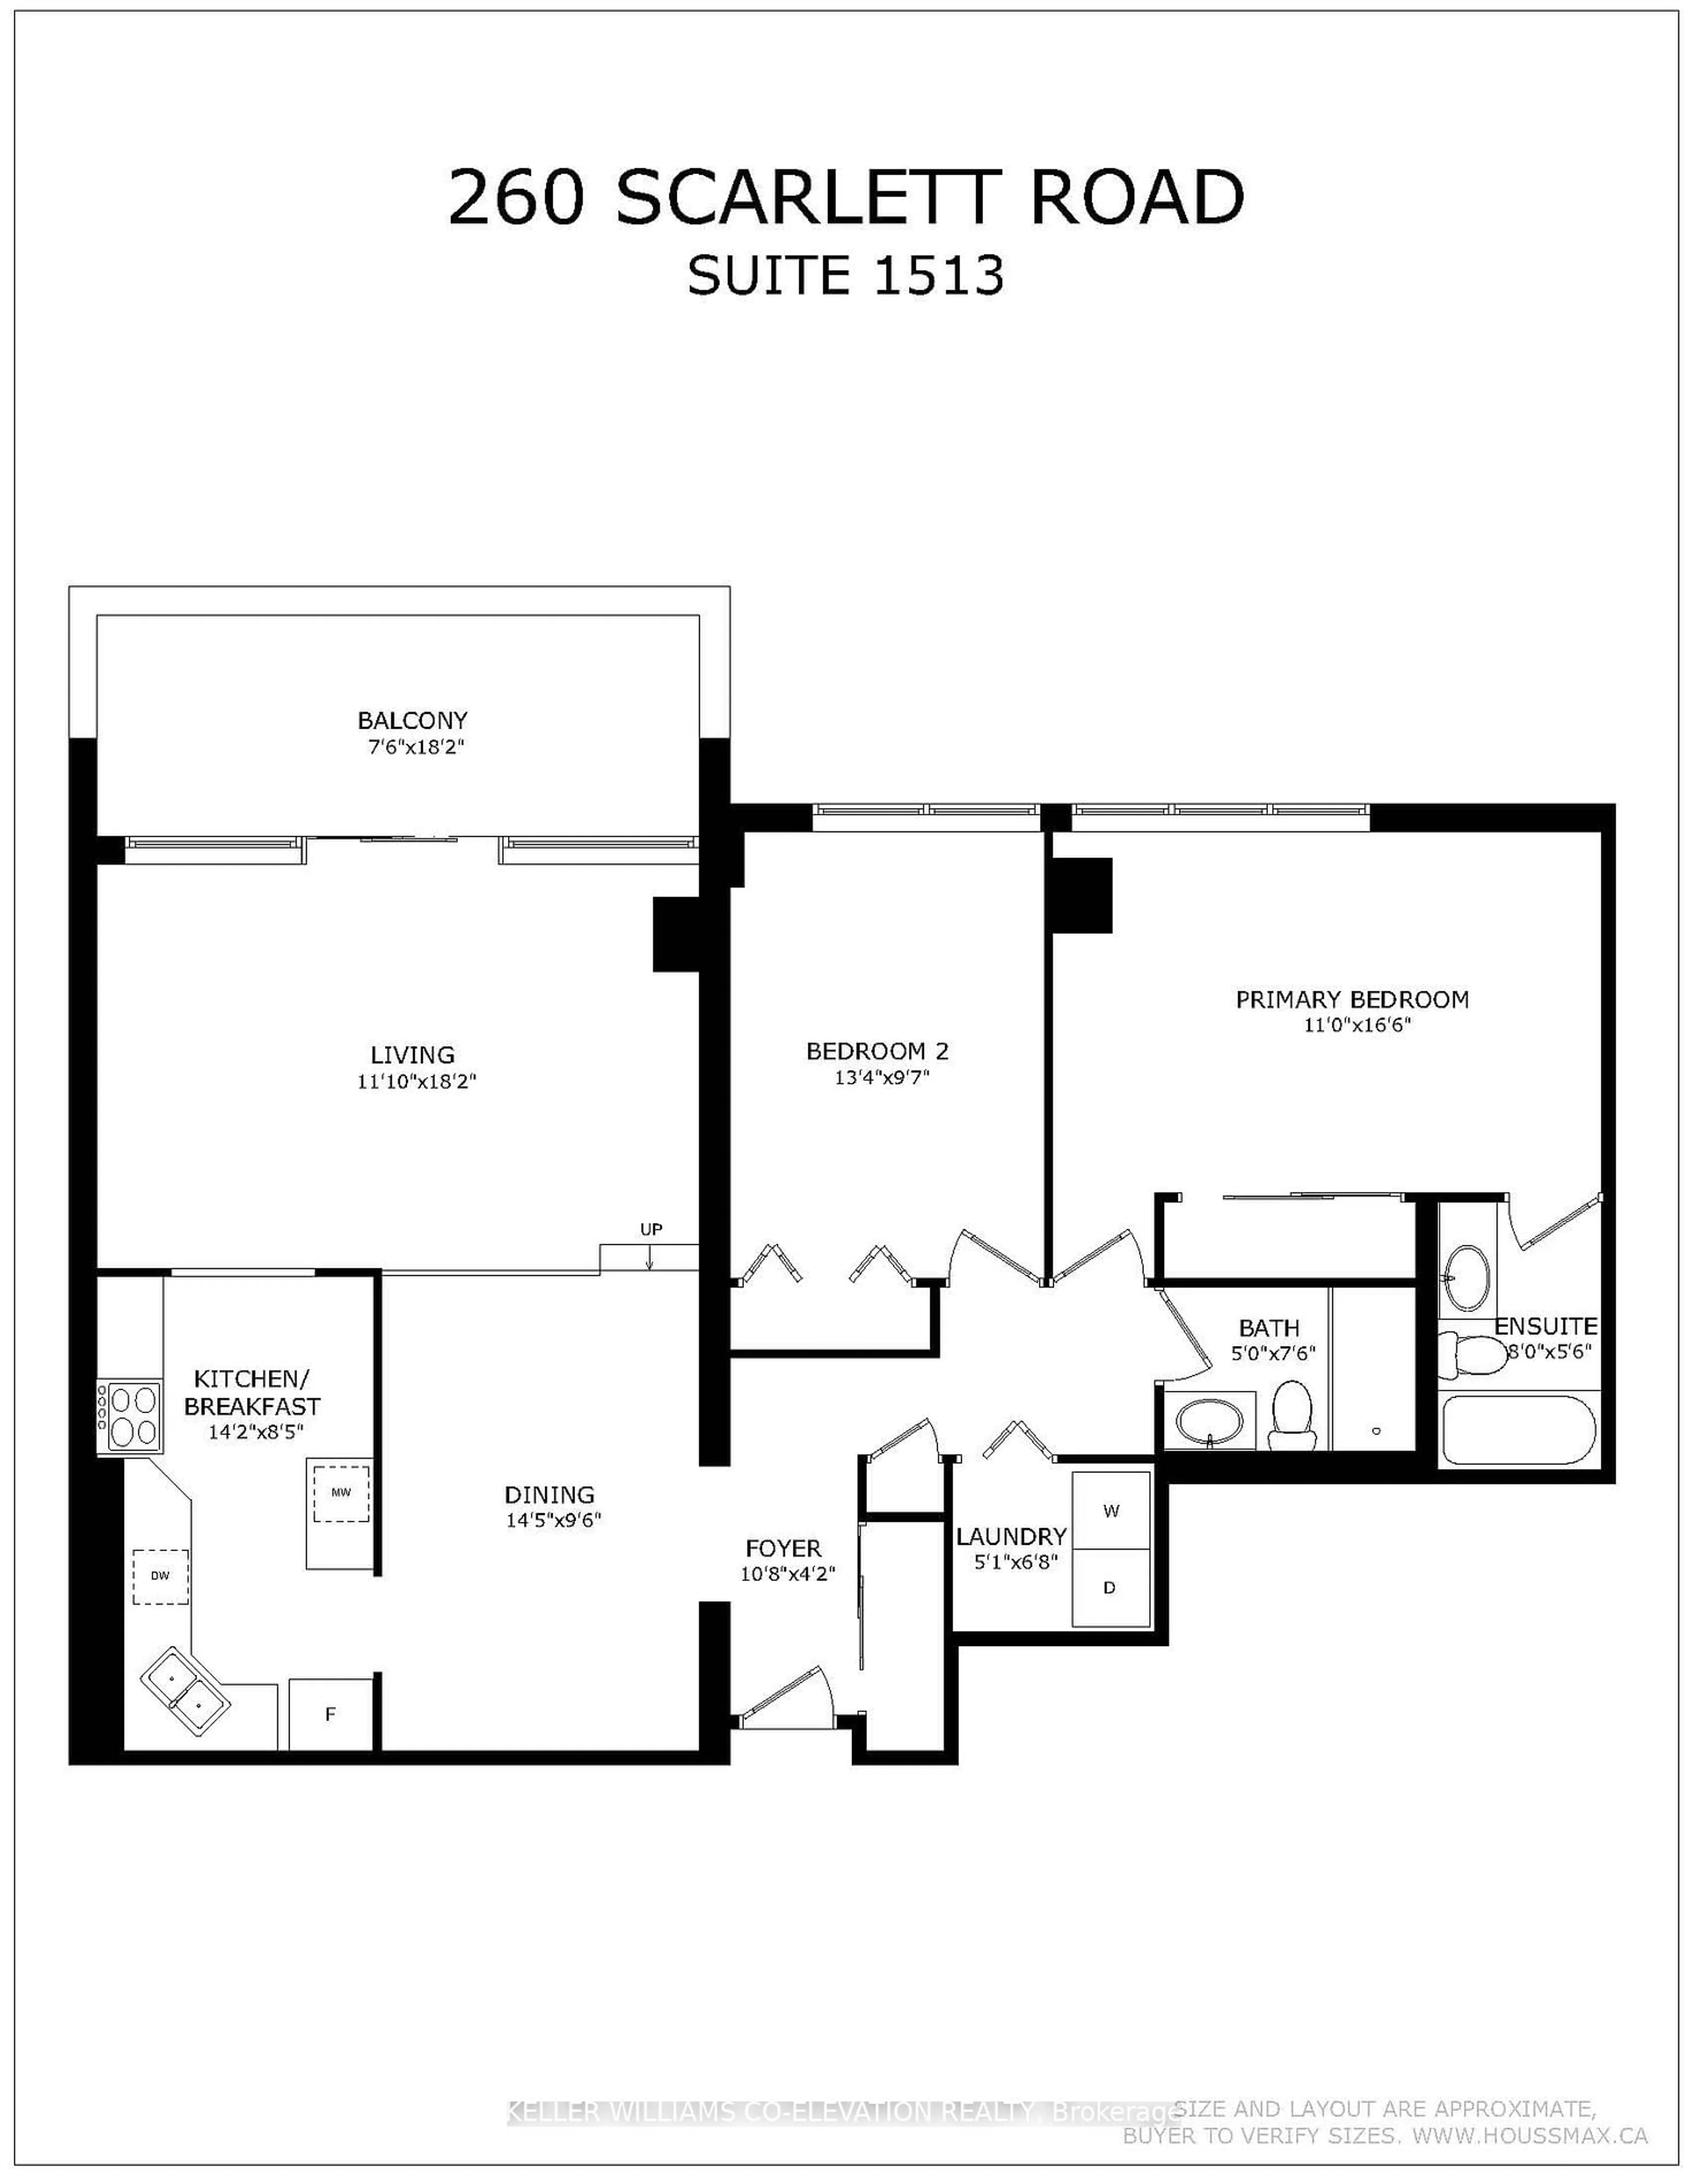 Floor plan for 260 Scarlett Rd #1513, Toronto Ontario M6N 4X6